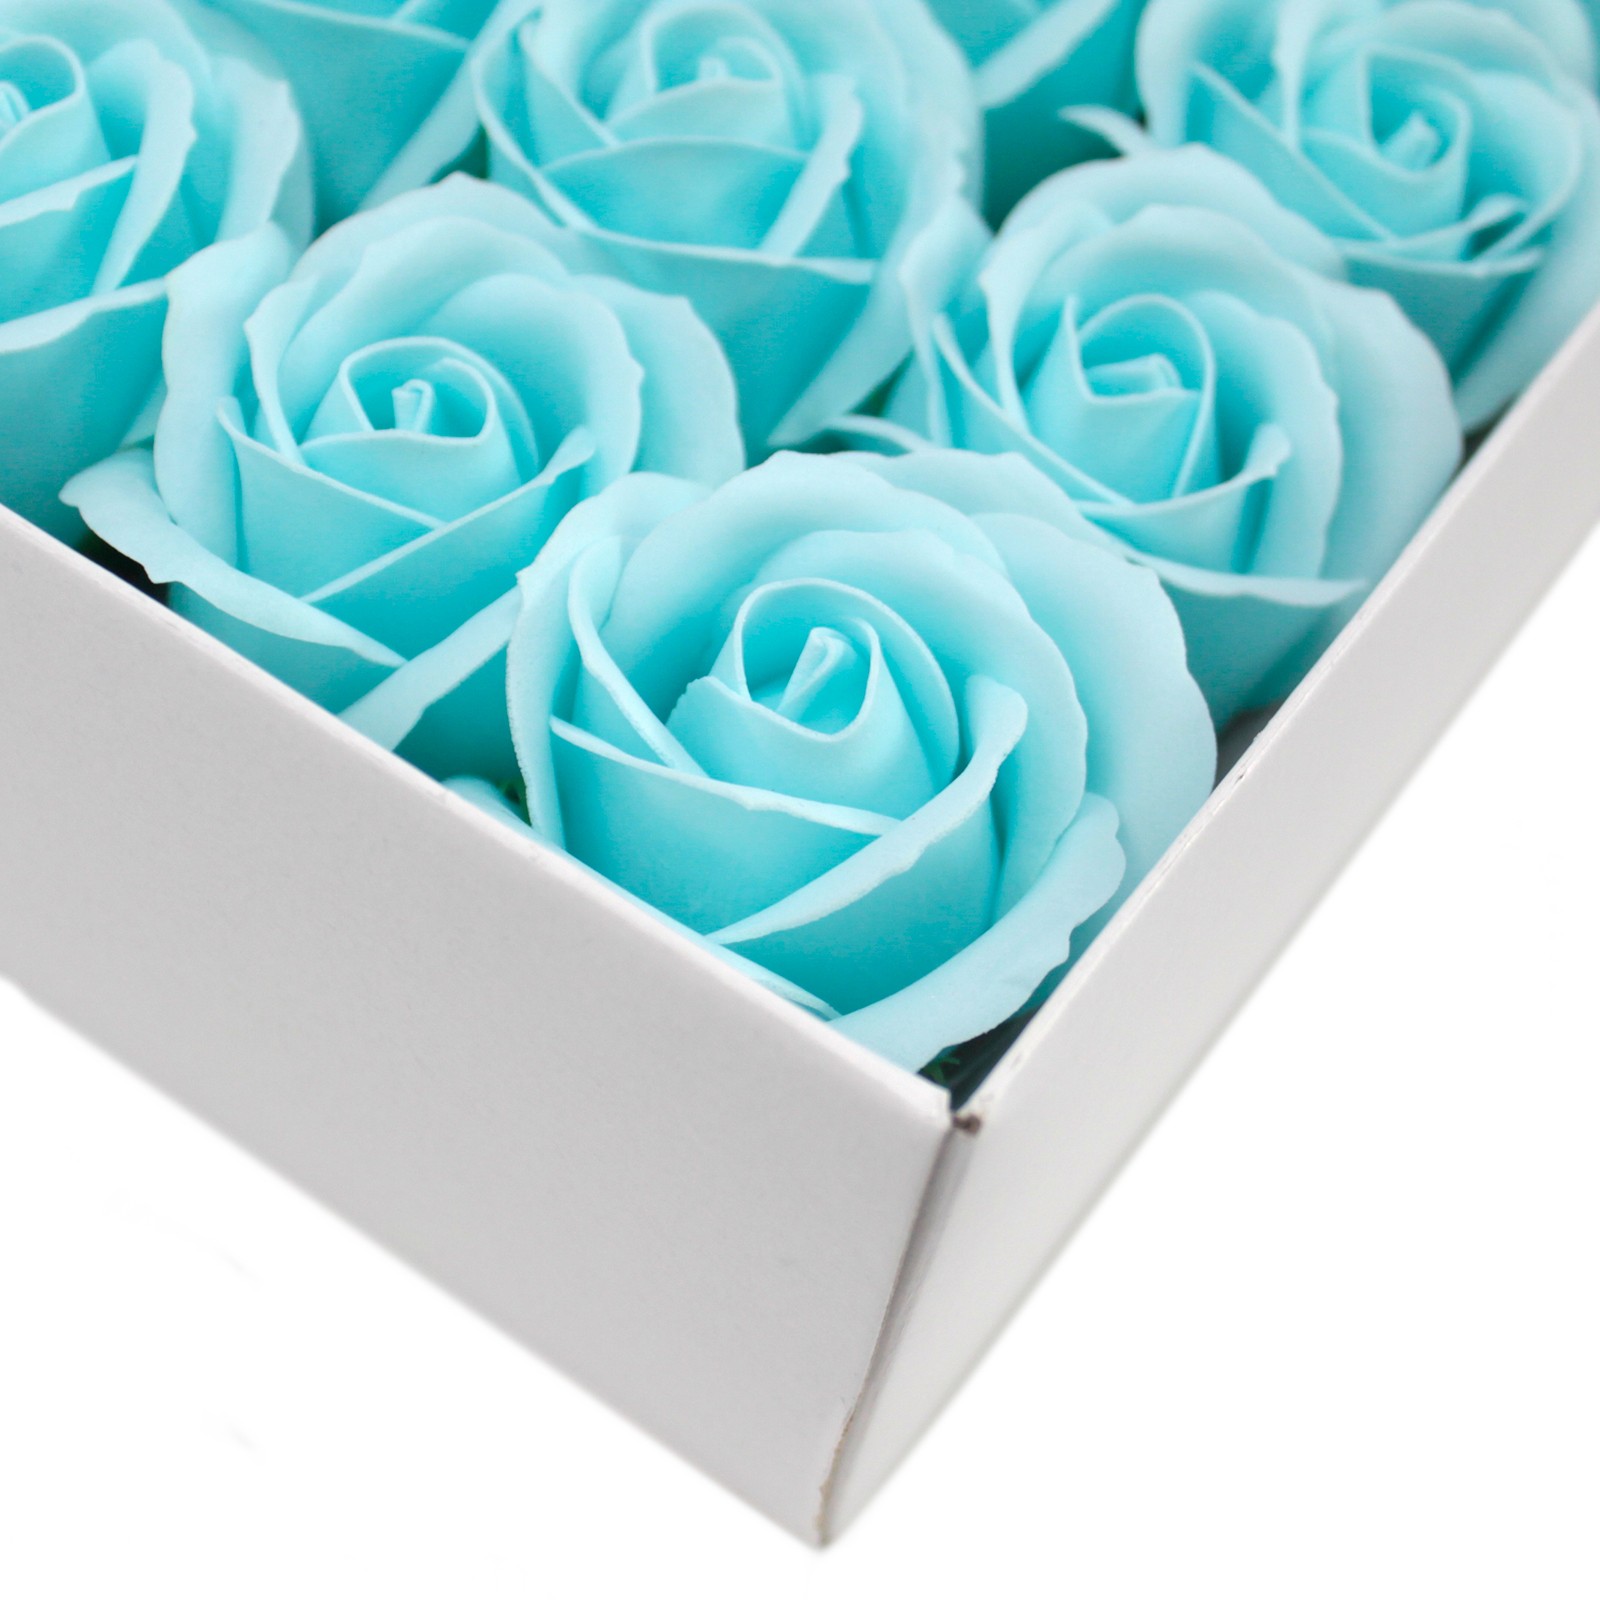 10 x Craft Soap Flowers - Med Rose - Baby Blue